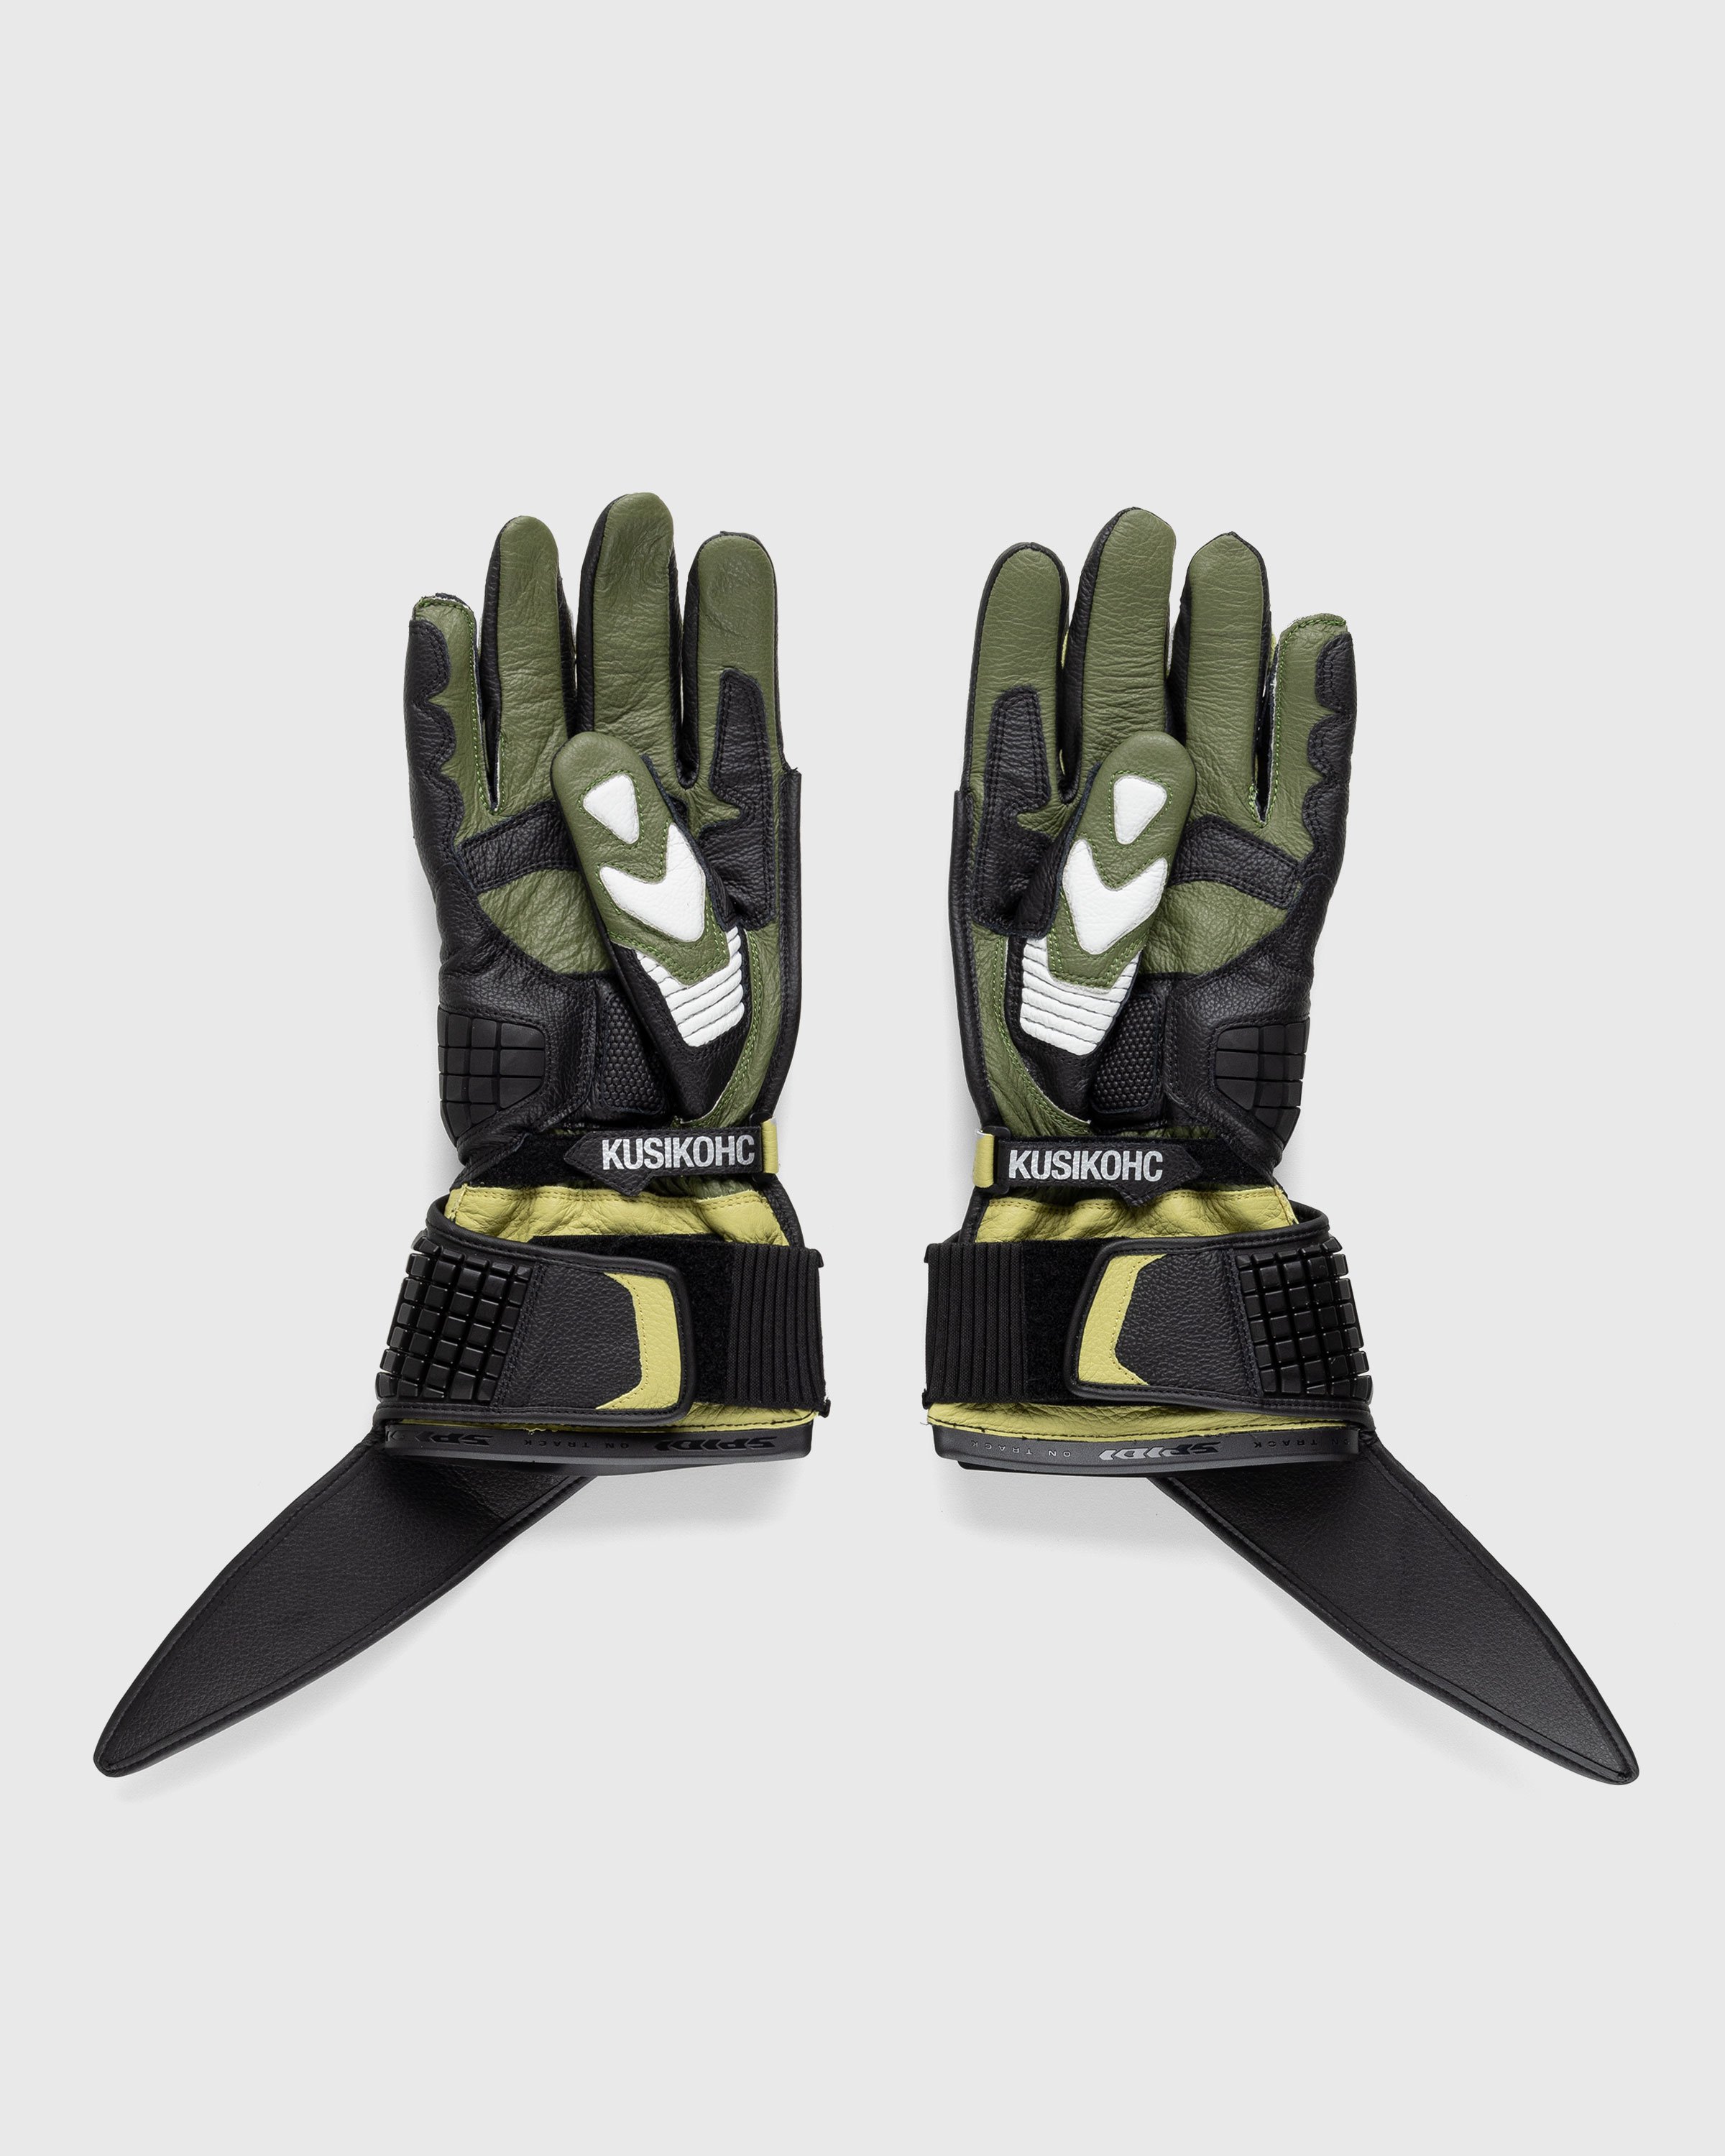 KUSIKOHC - Spidi Gloves Black/Dark Green - Accessories - Multi - Image 2